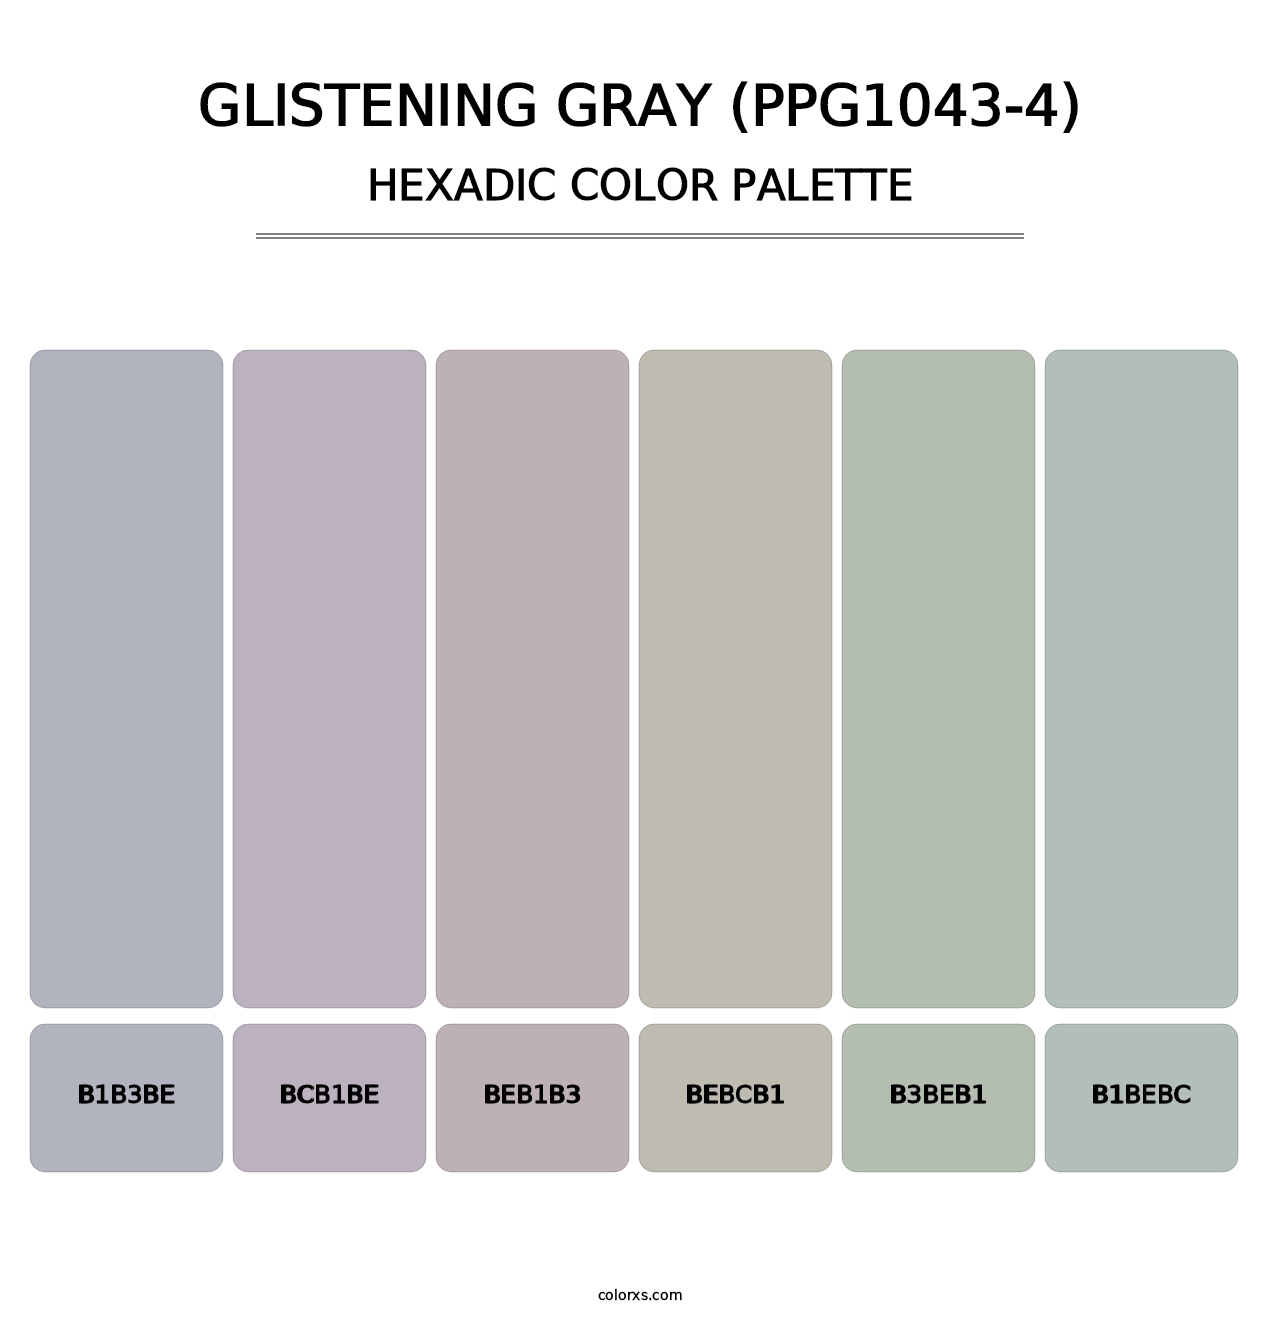 Glistening Gray (PPG1043-4) - Hexadic Color Palette